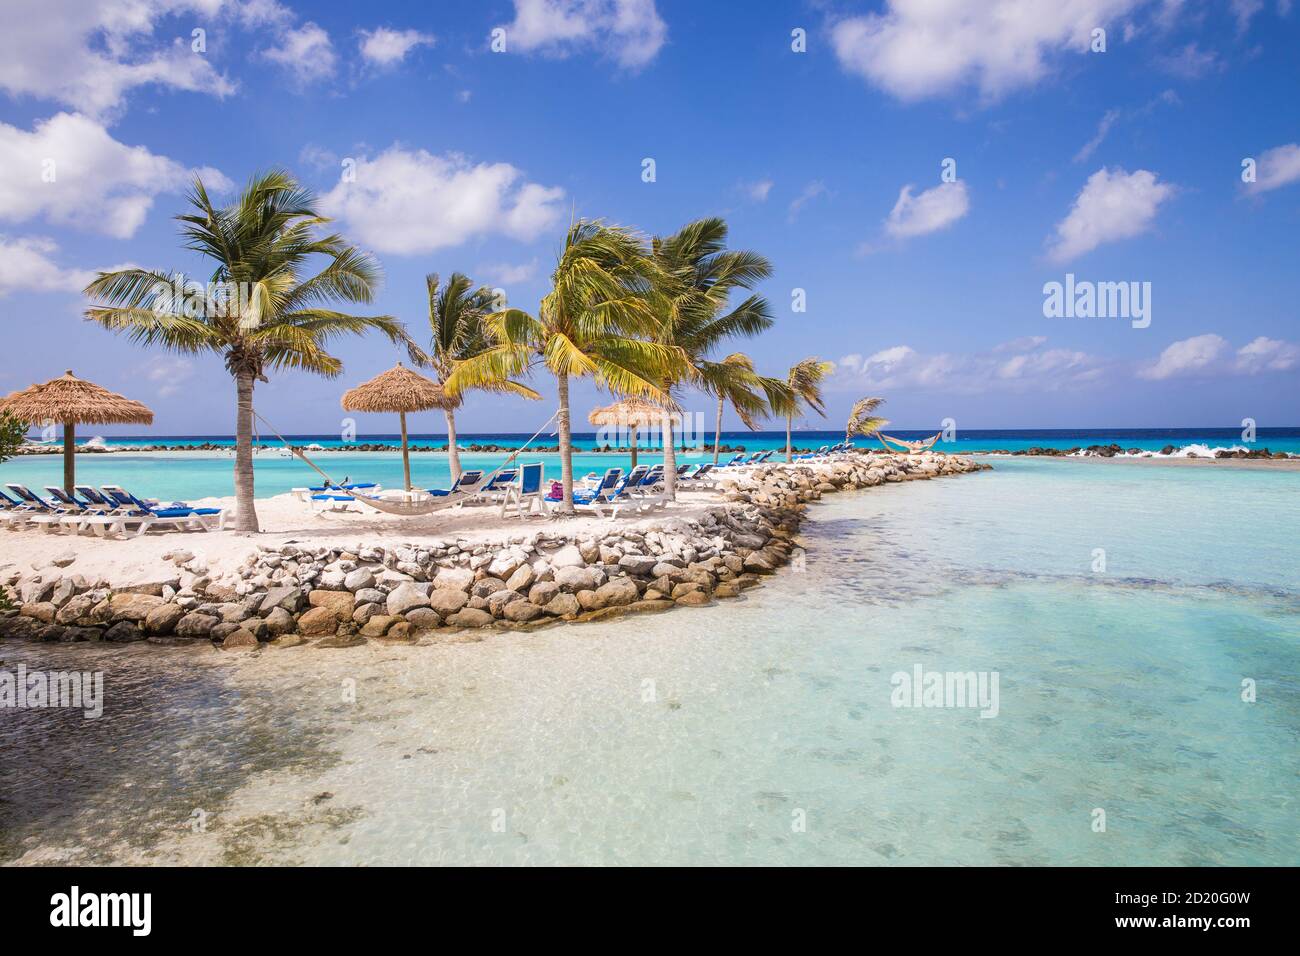 Caribbean, Netherland Antilles, Aruba, Oranjestad, Renaissance Island Stock Photo